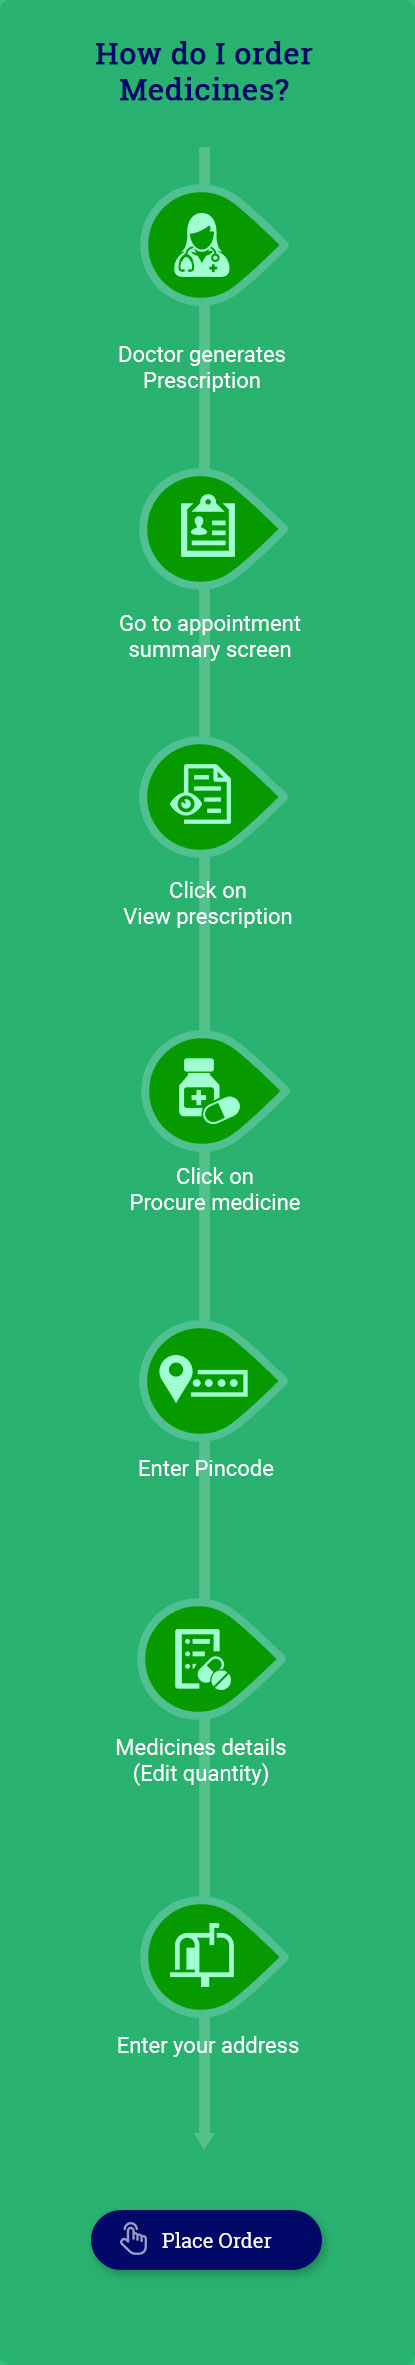 Online Medicine Delivery